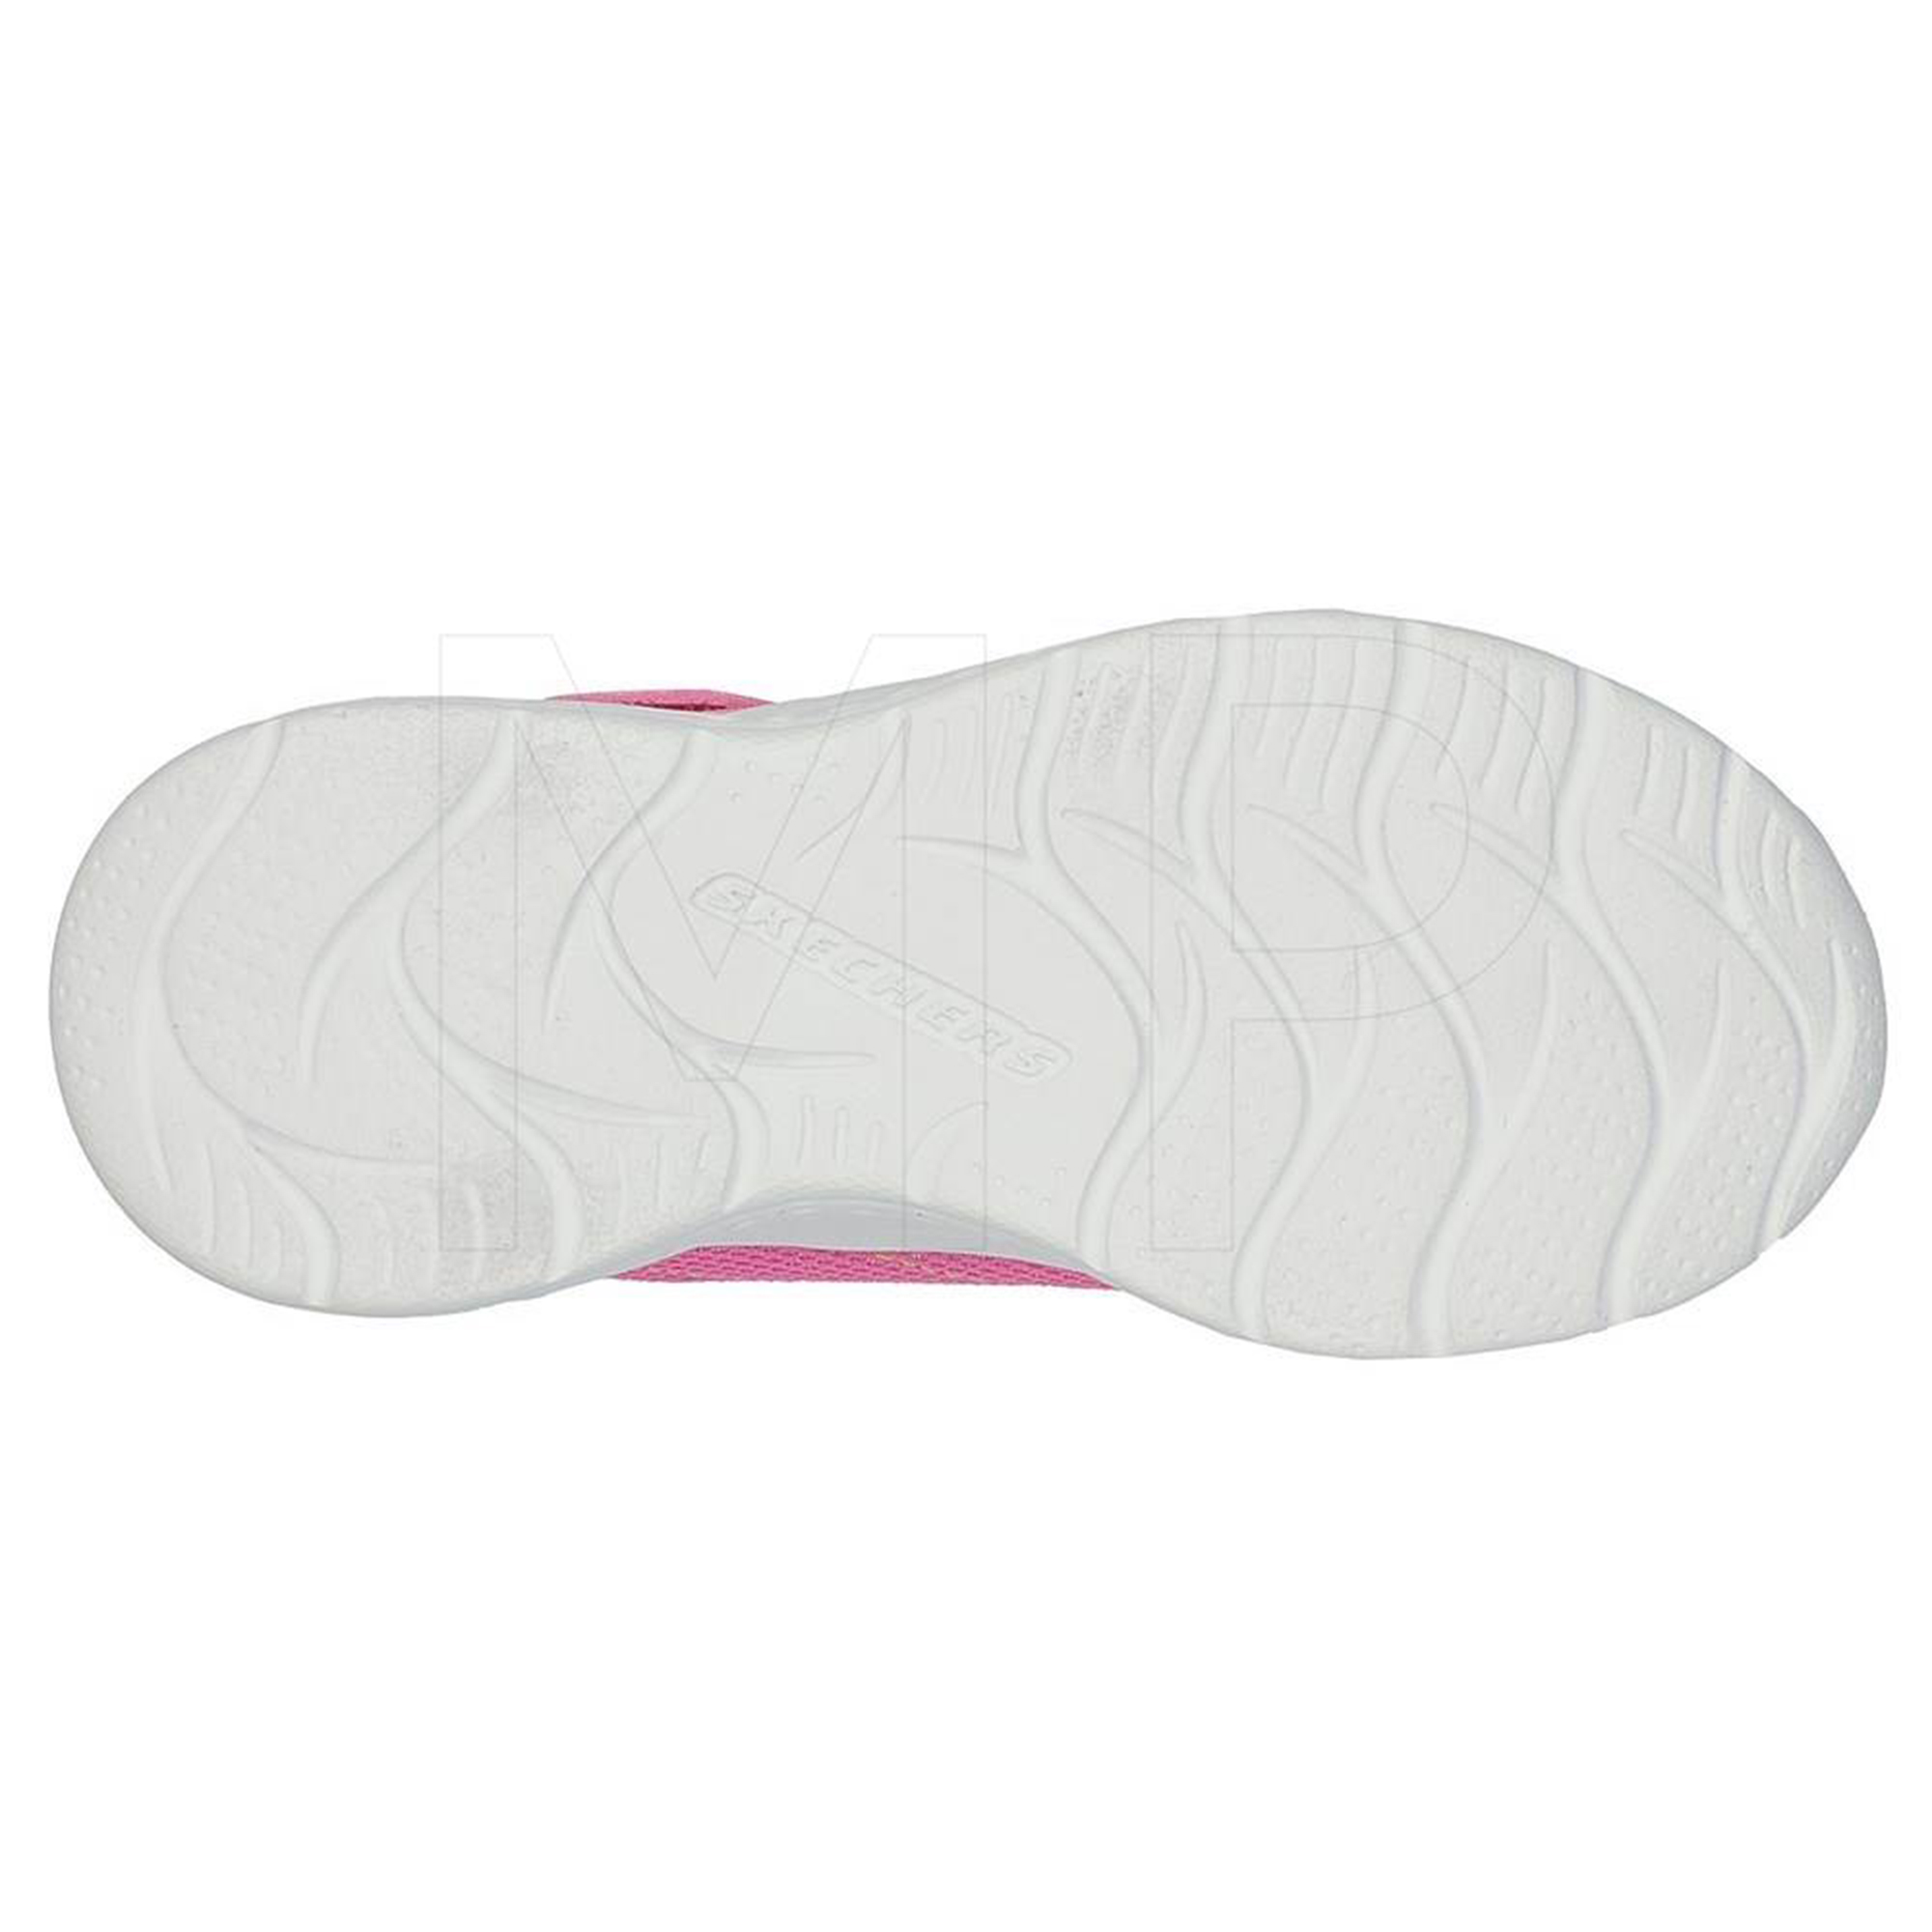 Skechers Snap Sprints Eternal Shine 302455L/PKMT Sneakers Mädchen Pink